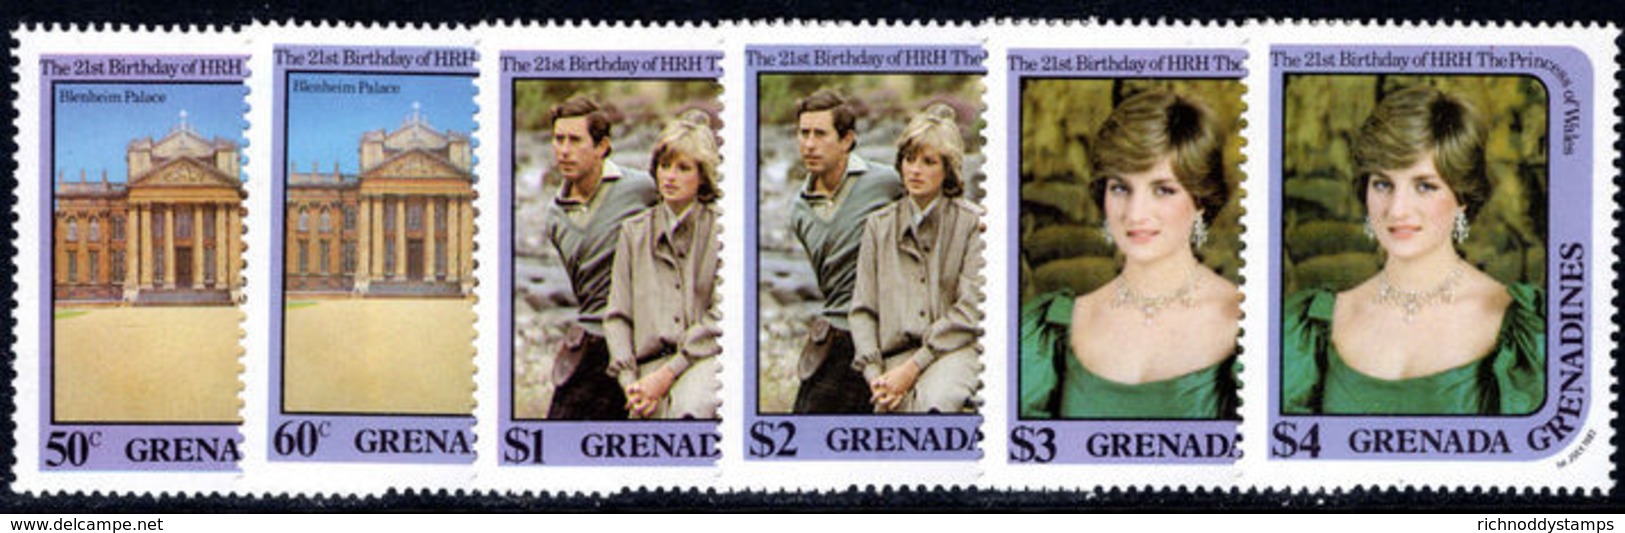 Grenada Grenadines 1982 Princess Of Wales Birthday Unmounted Mint. - Grenade (1974-...)